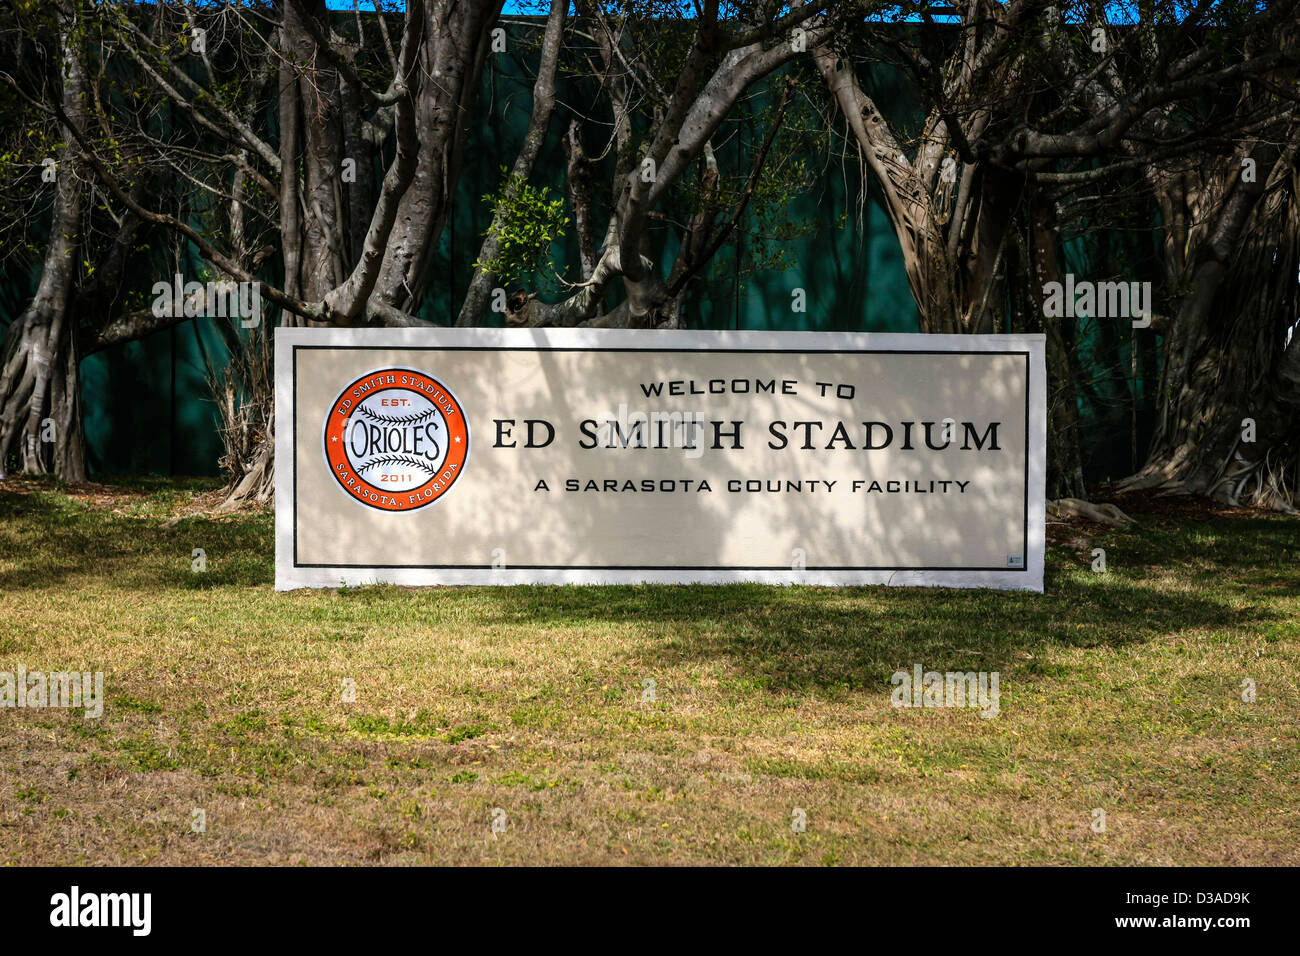 The Ed Smith Stadium Welcome sign in Sarasota Florida Stock Photo